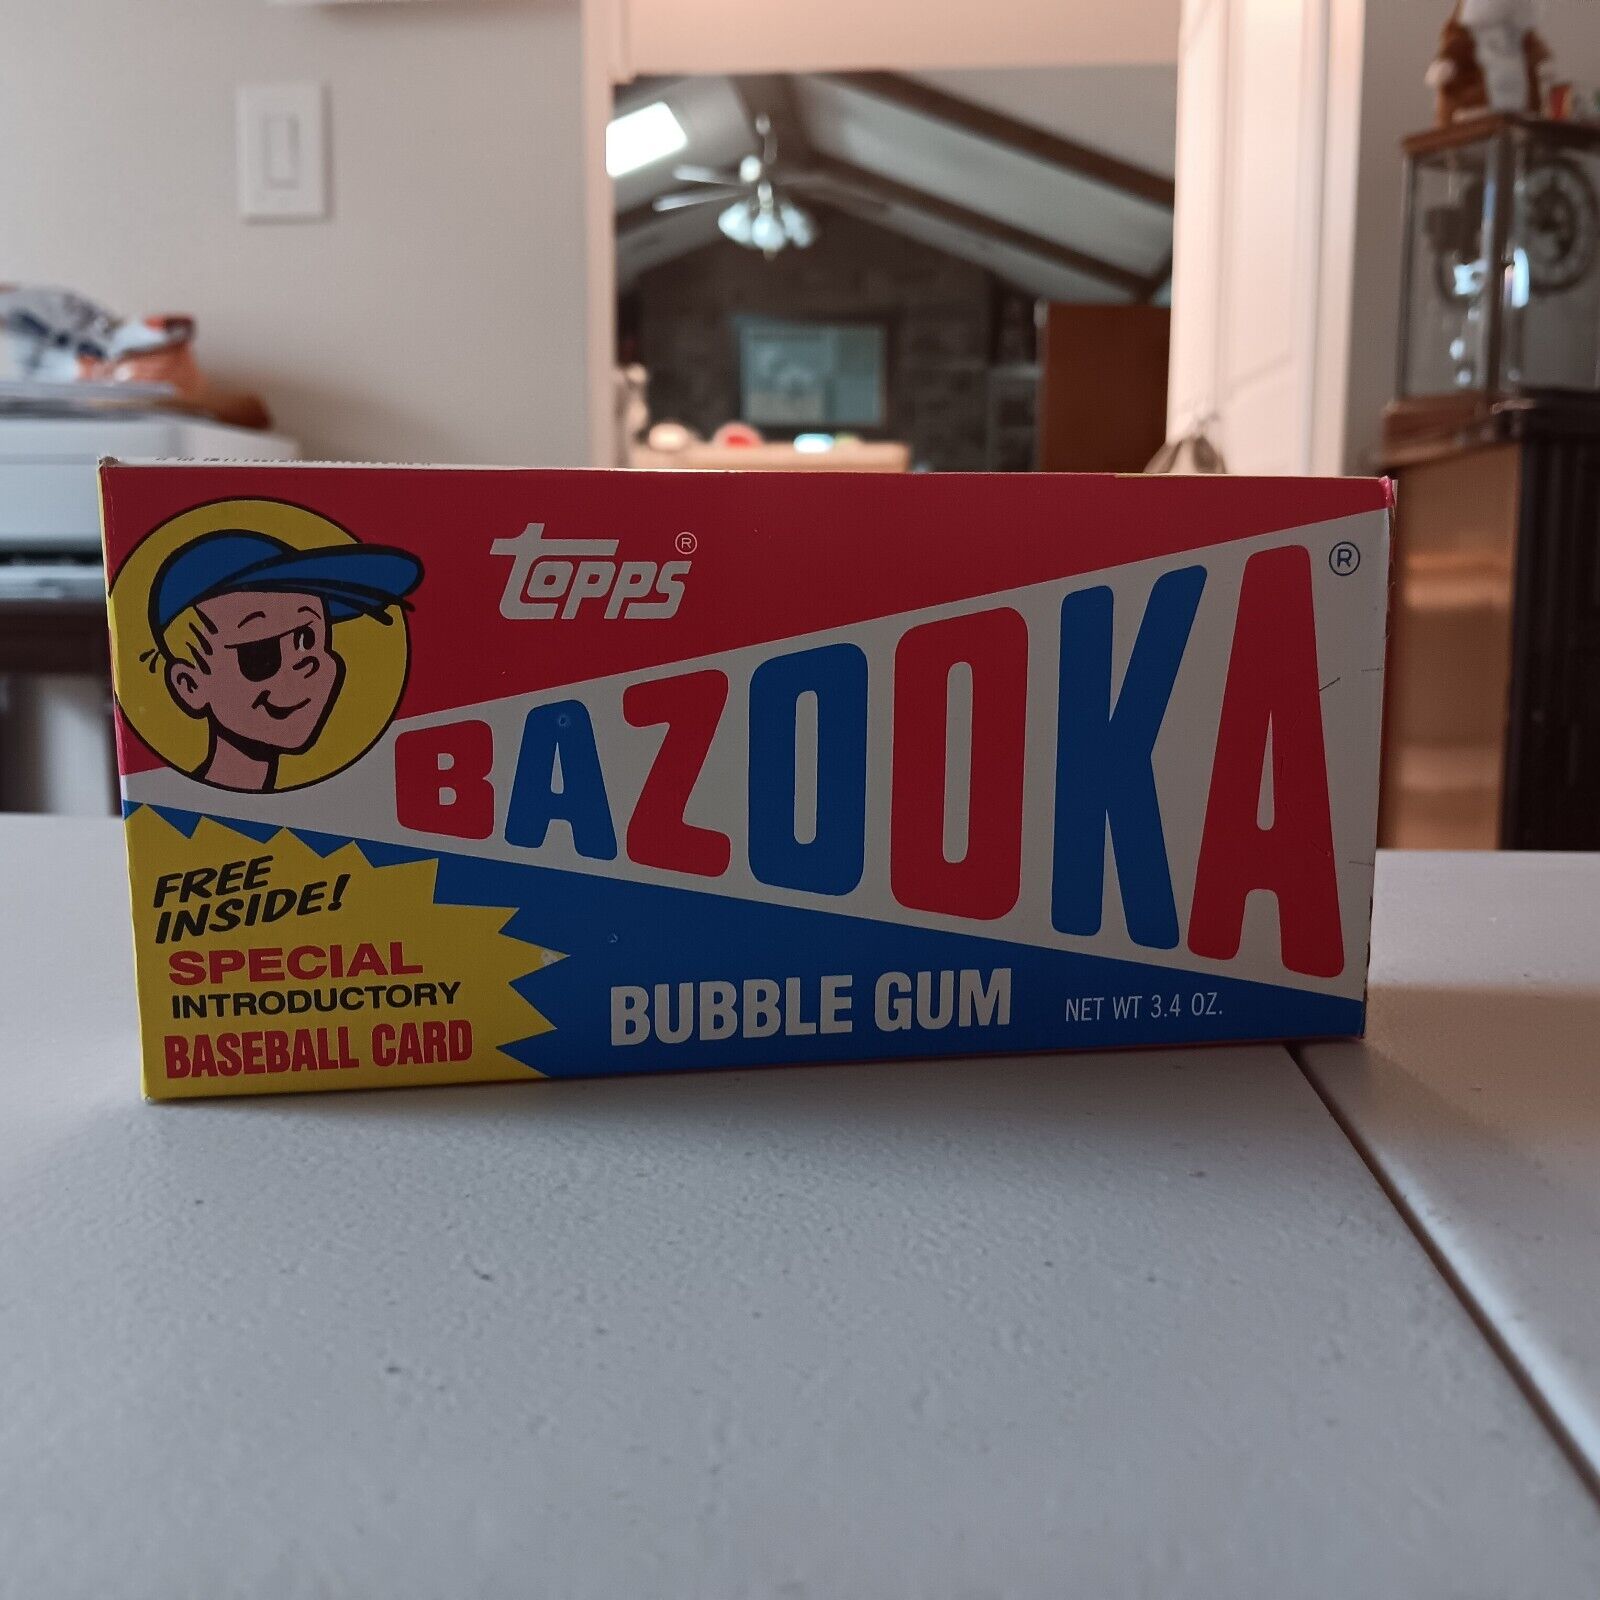 Original 1988 Bazooka Bubble Gum Unopened. FREE BASEBALL CARD INSIDE